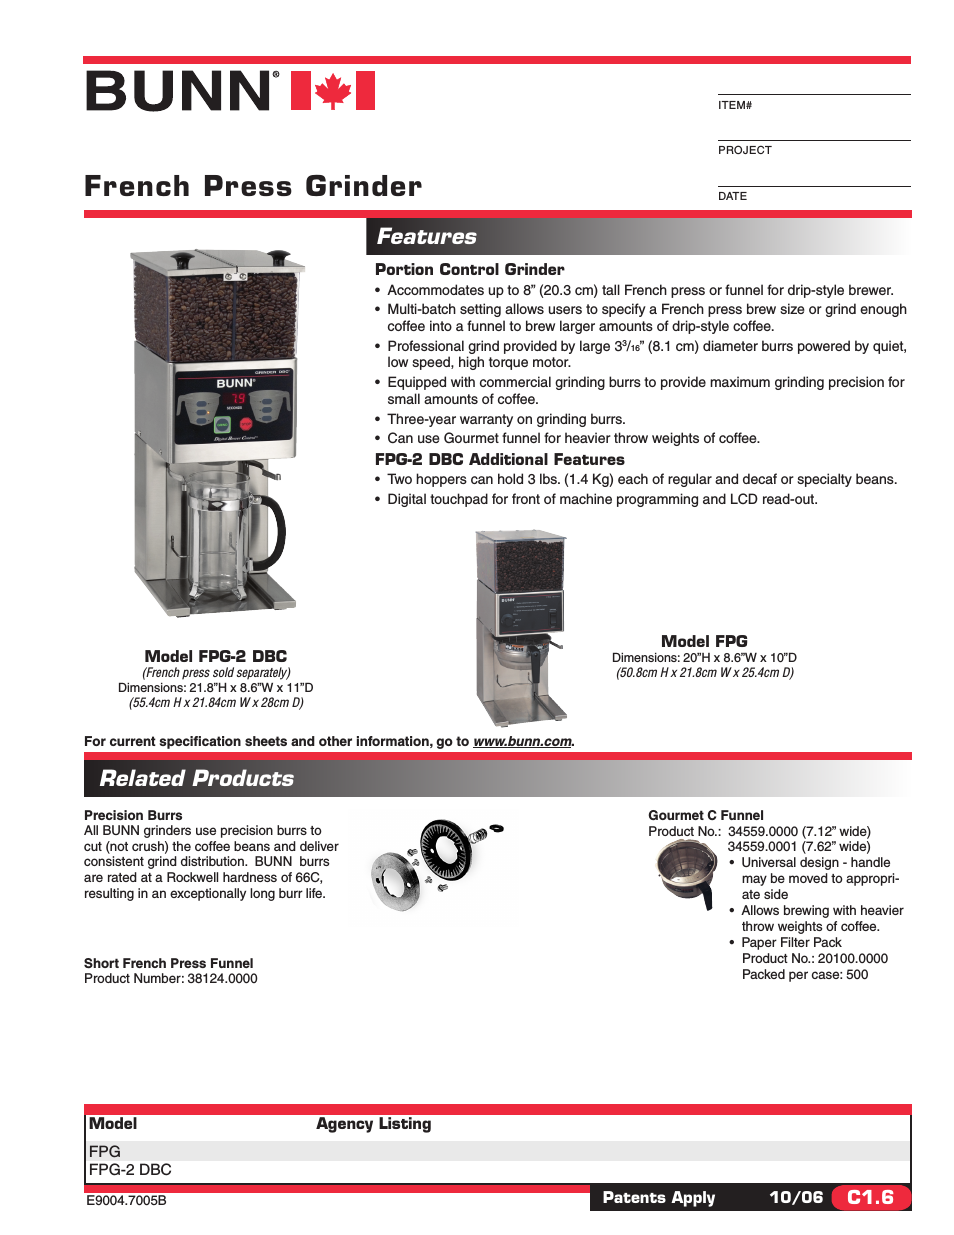 FRENCH PRESS FPG-2 DBC